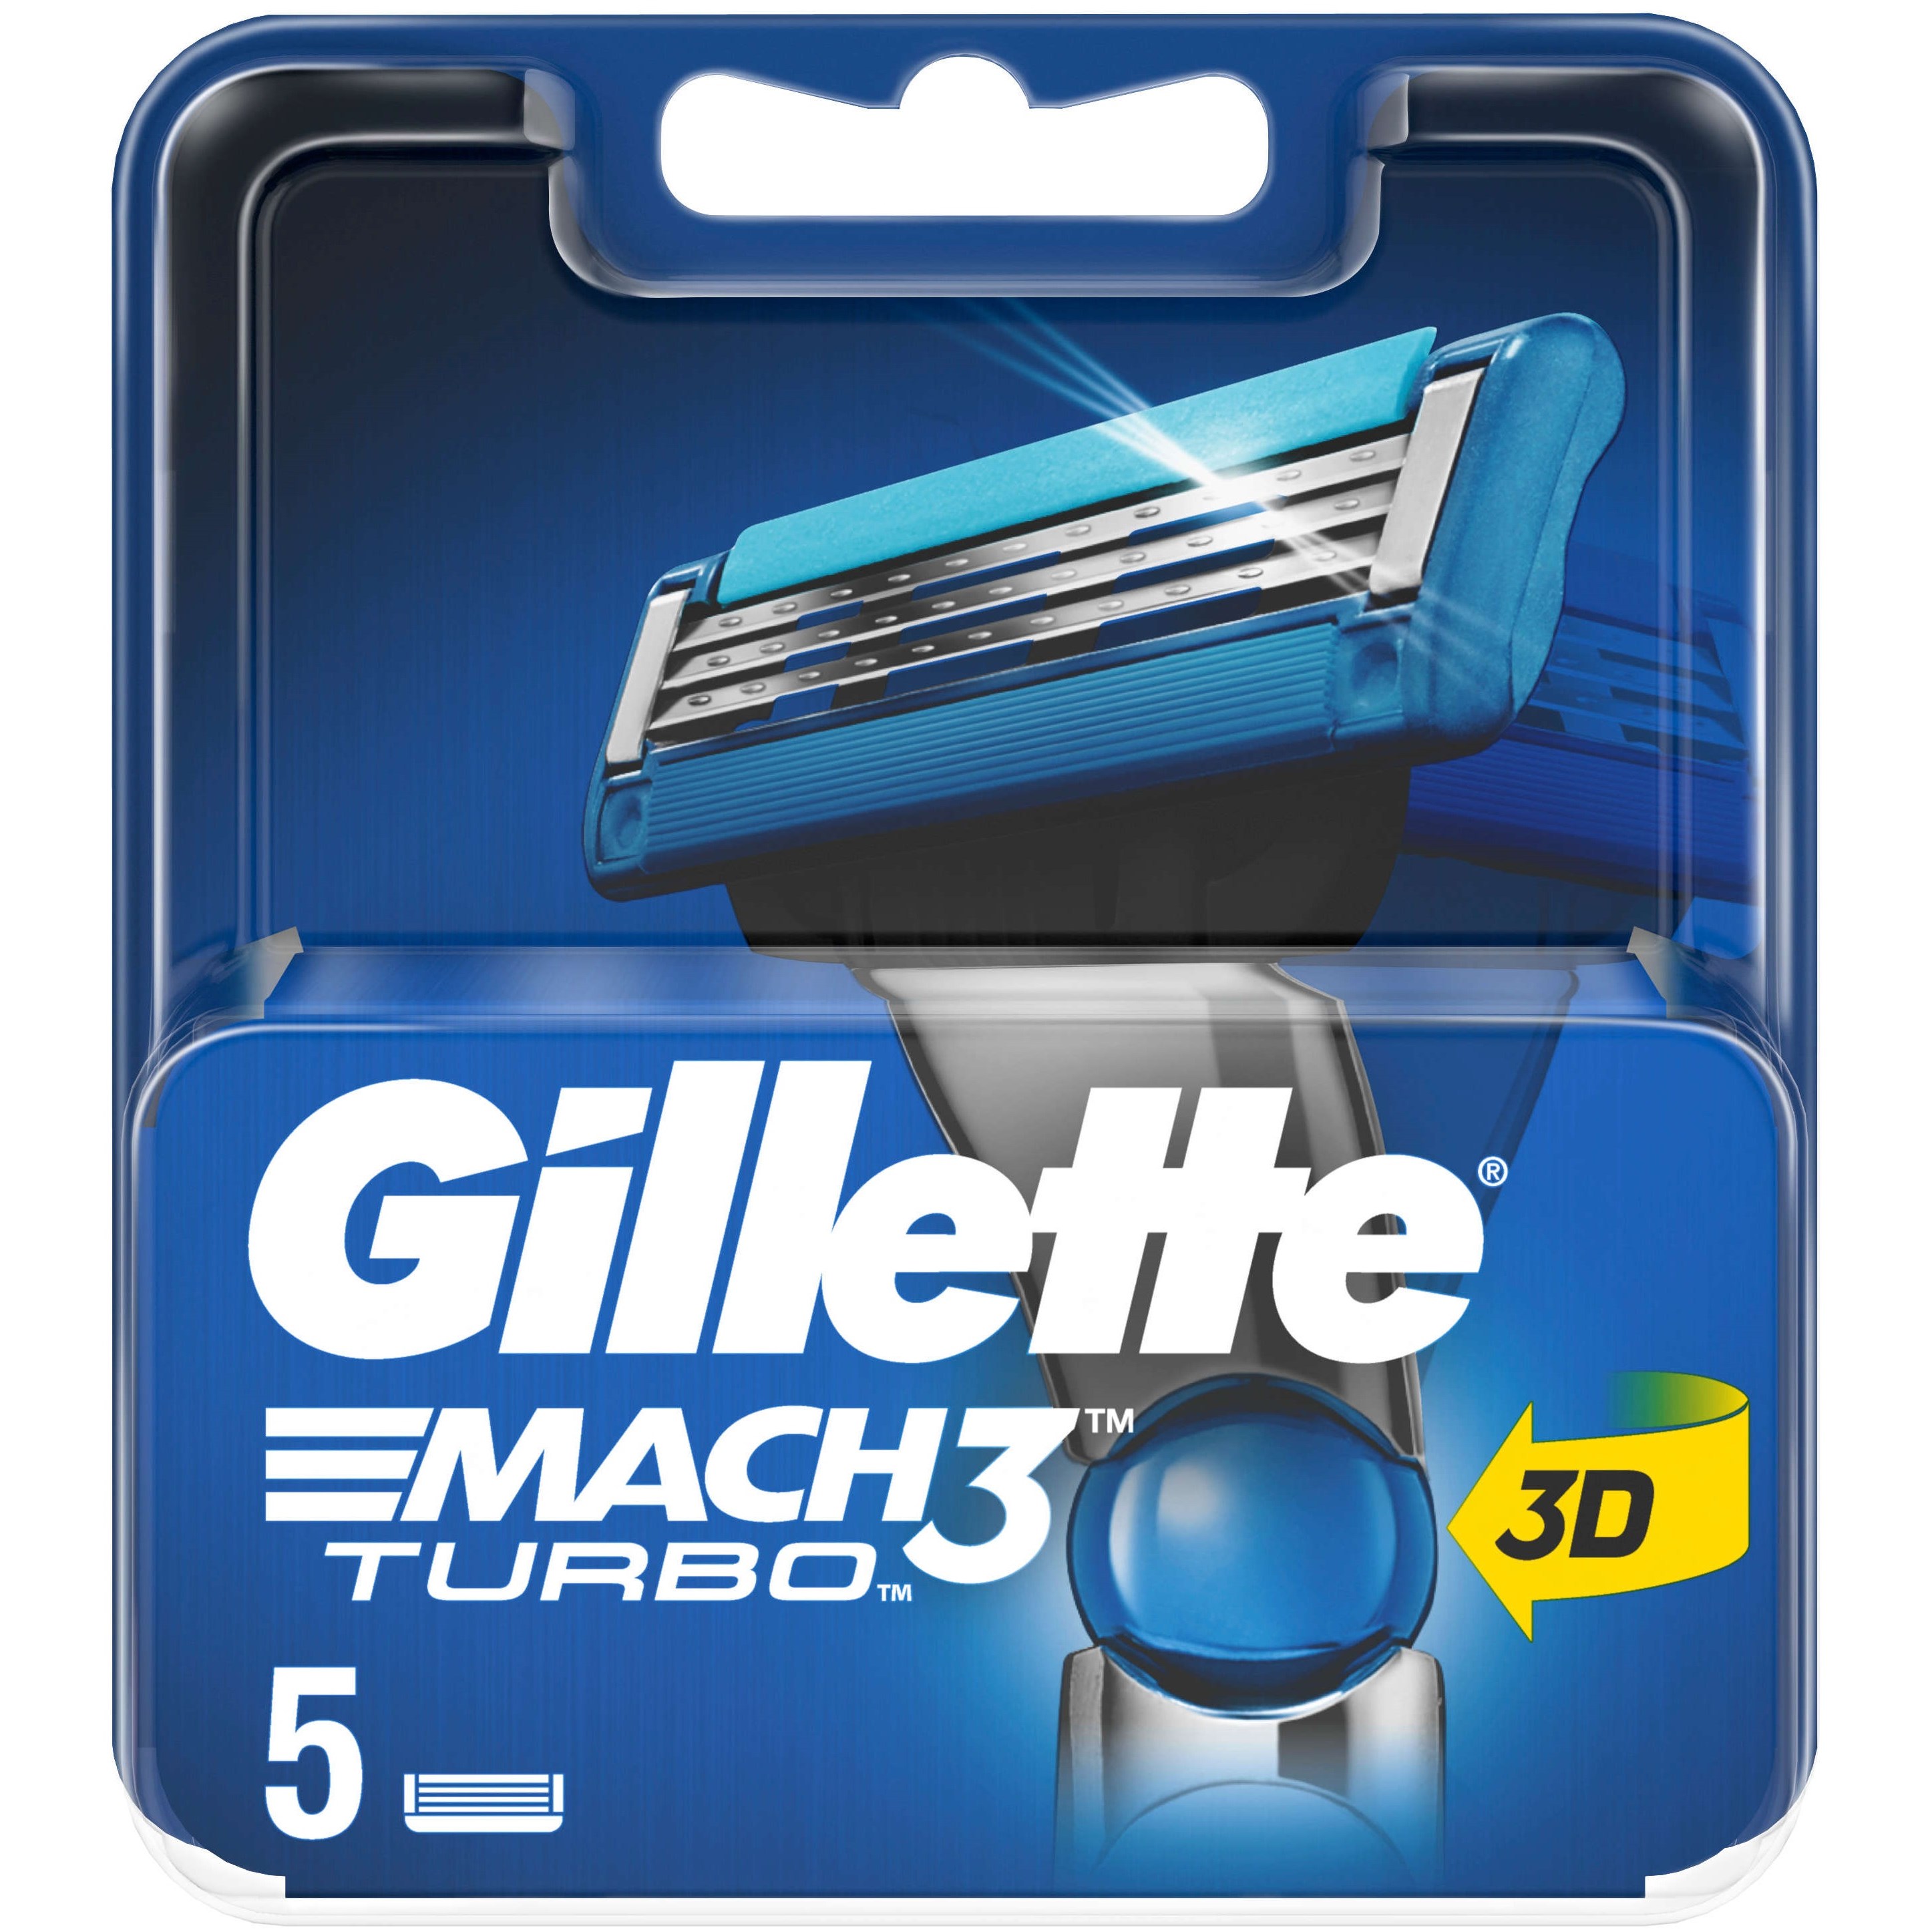 Gillette Mach3 Turbo Men’s Razor Blade Refills 5 st